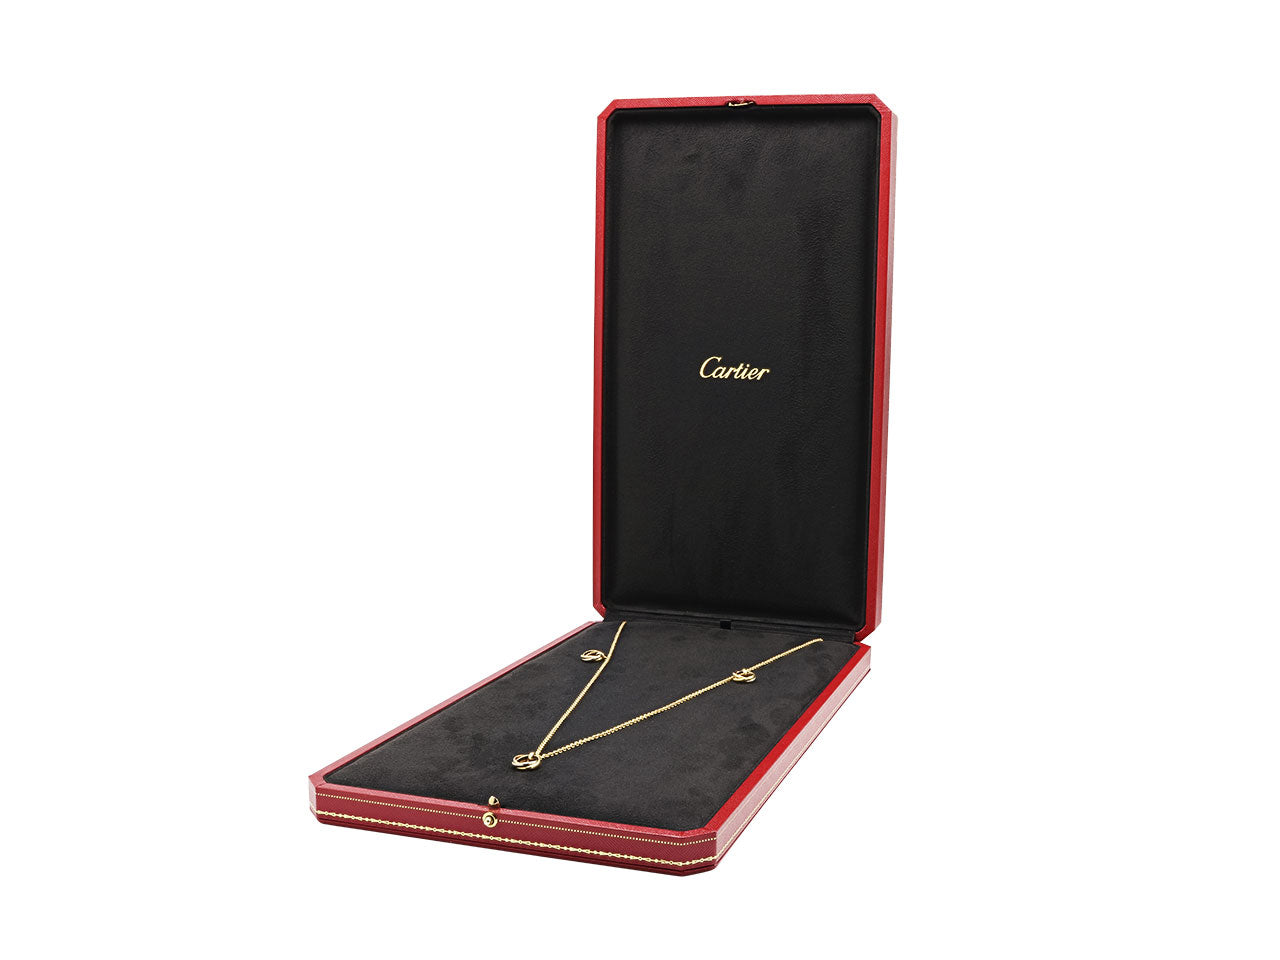 Cartier 'Trinity De Cartier' Station Necklace in 18K Gold